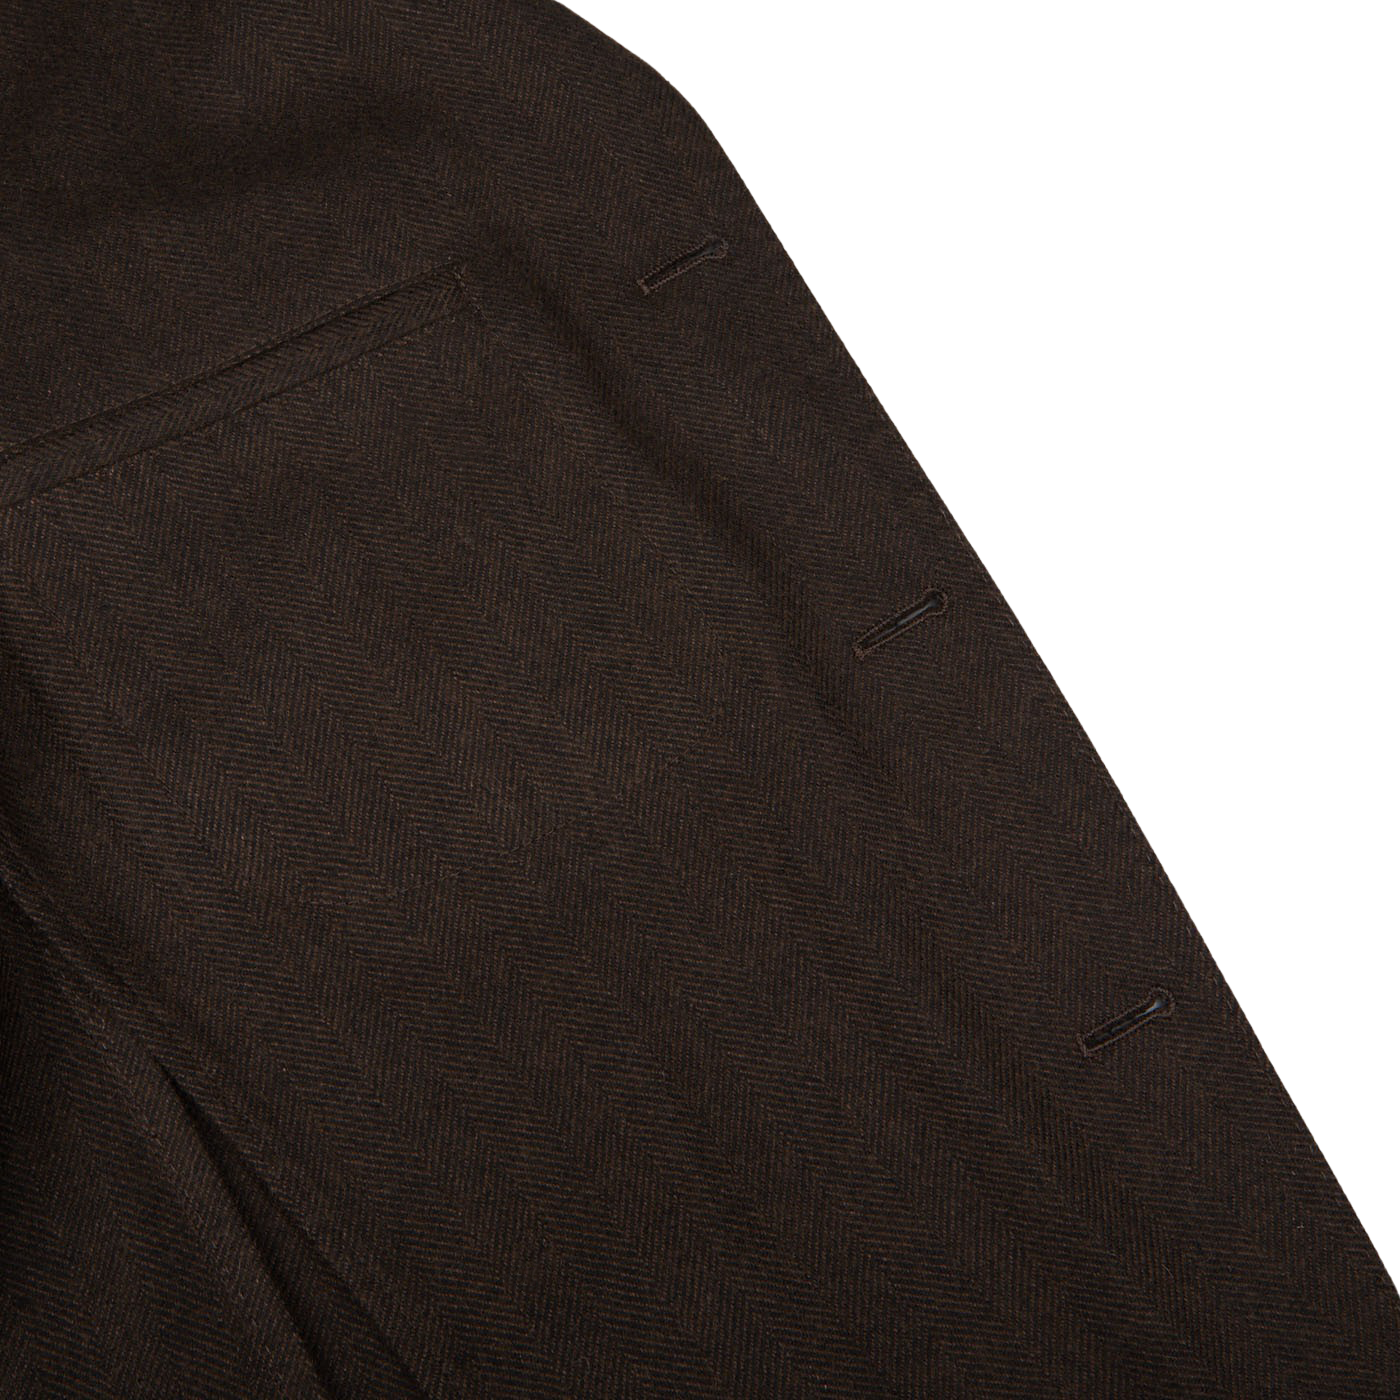 A close-up of a Boglioli Brown Herringbone Wool K Jacket coat on a white surface.